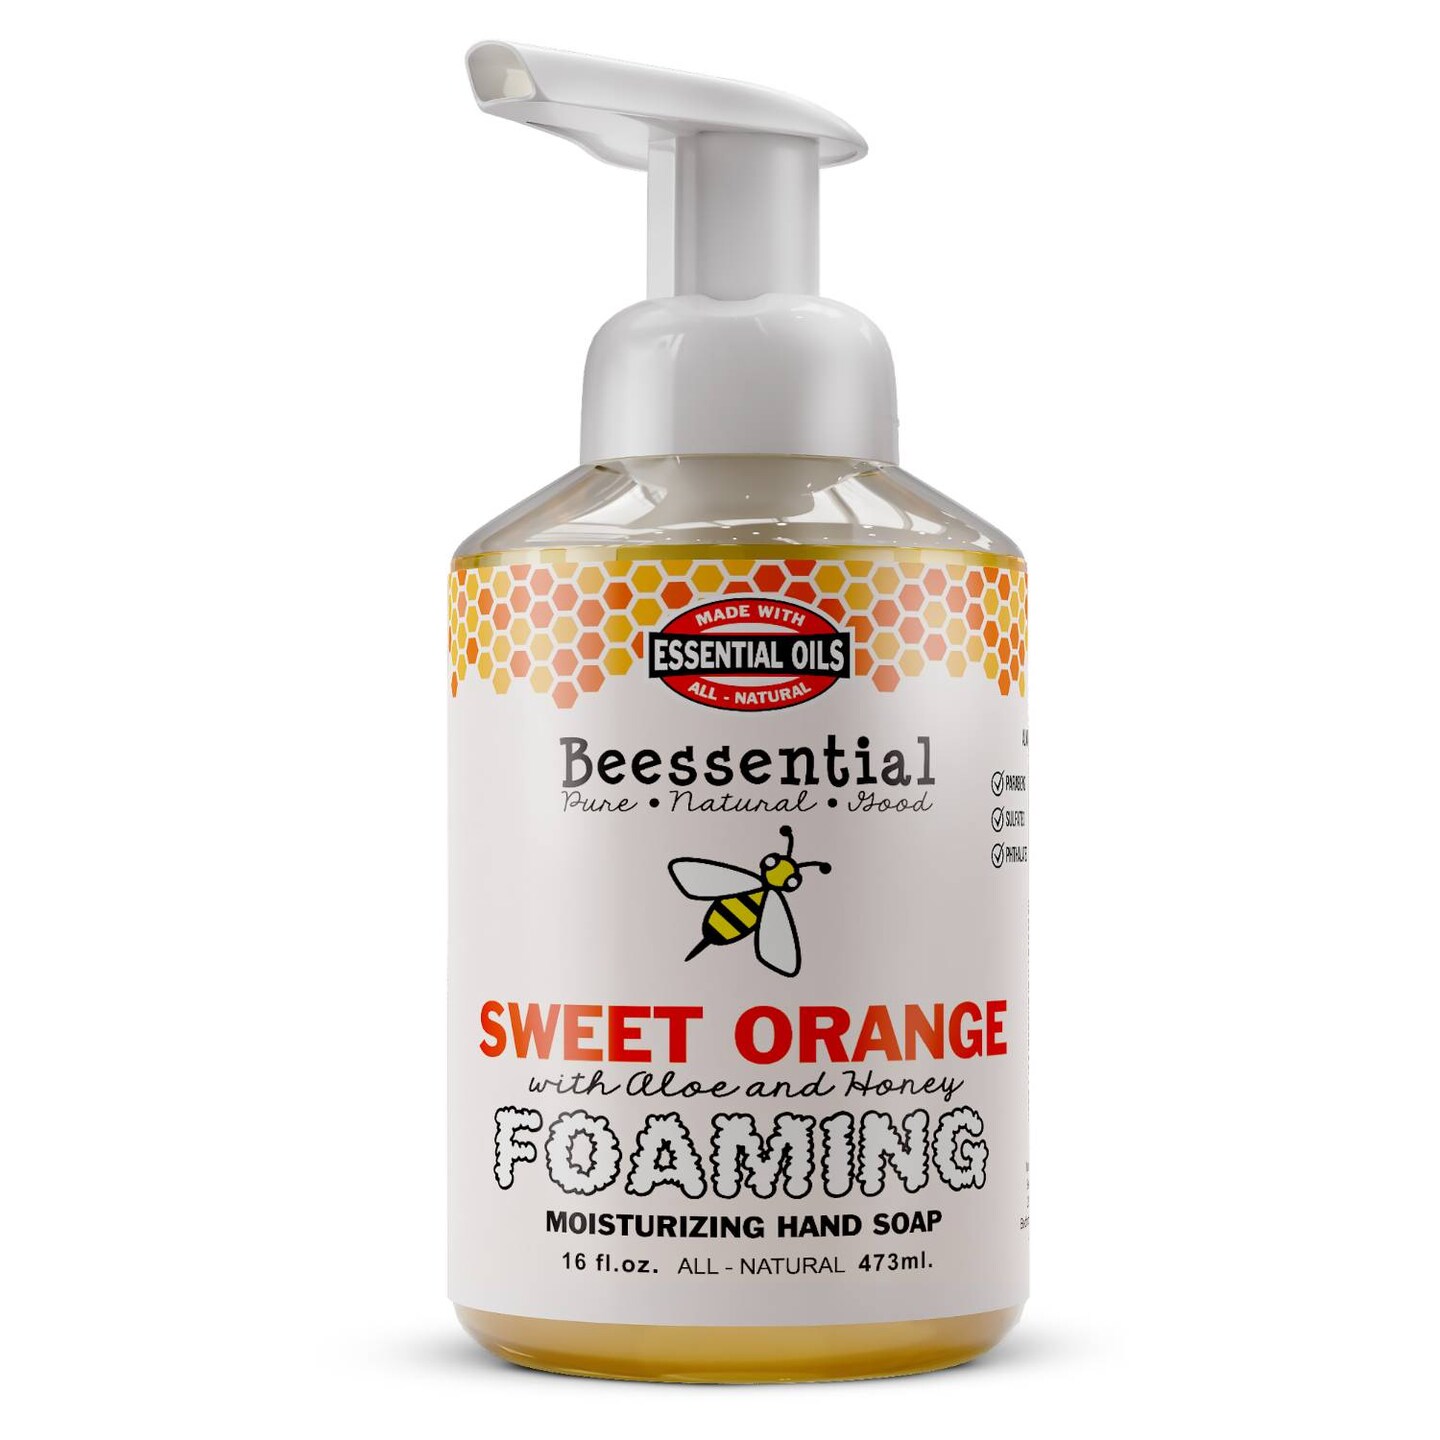 Beessential All Natural Foaming Dispenser Moisturizing Hand Soap Sweet Orange